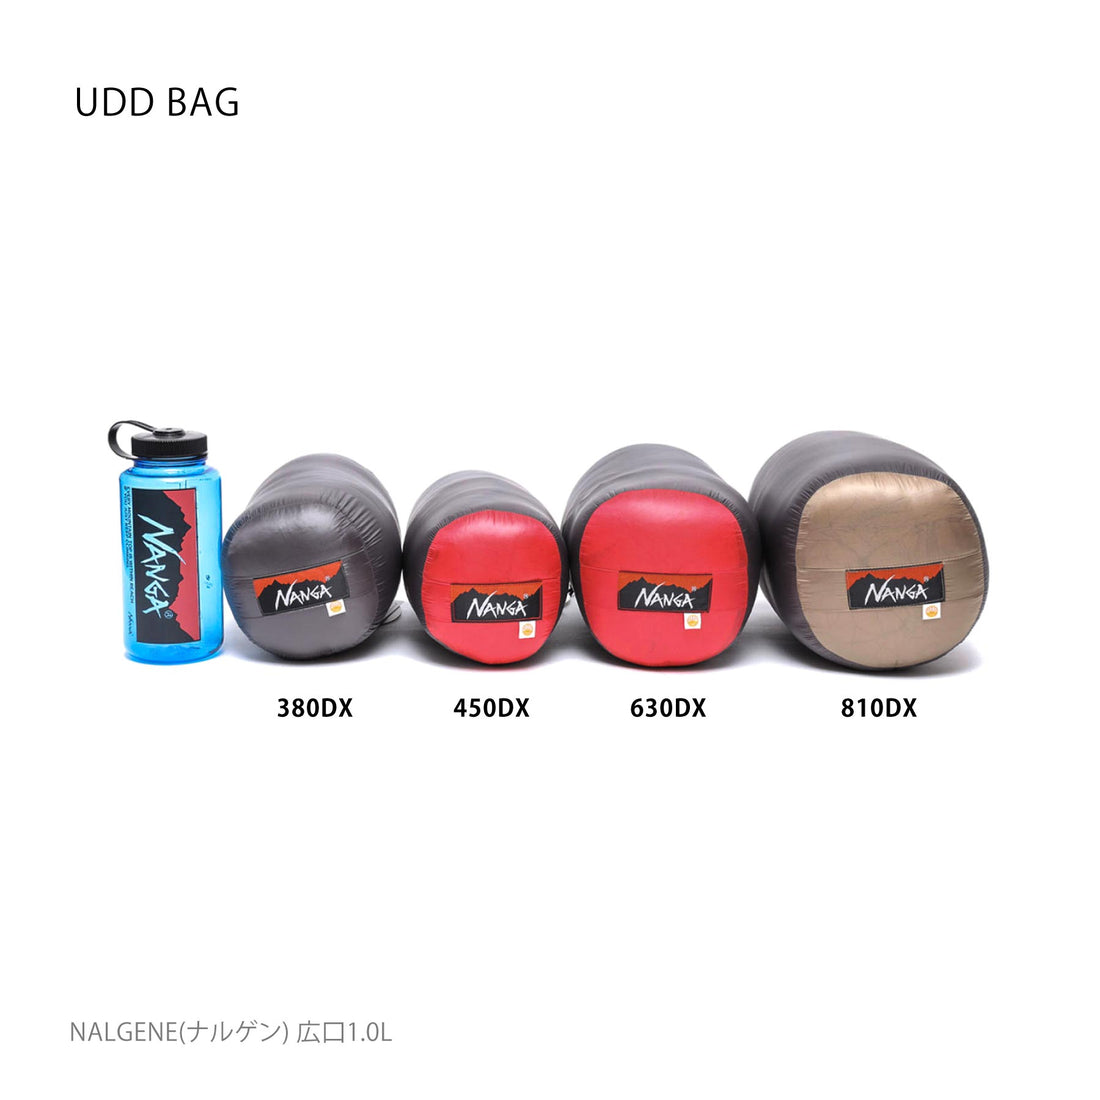 UDD BAG 450DX